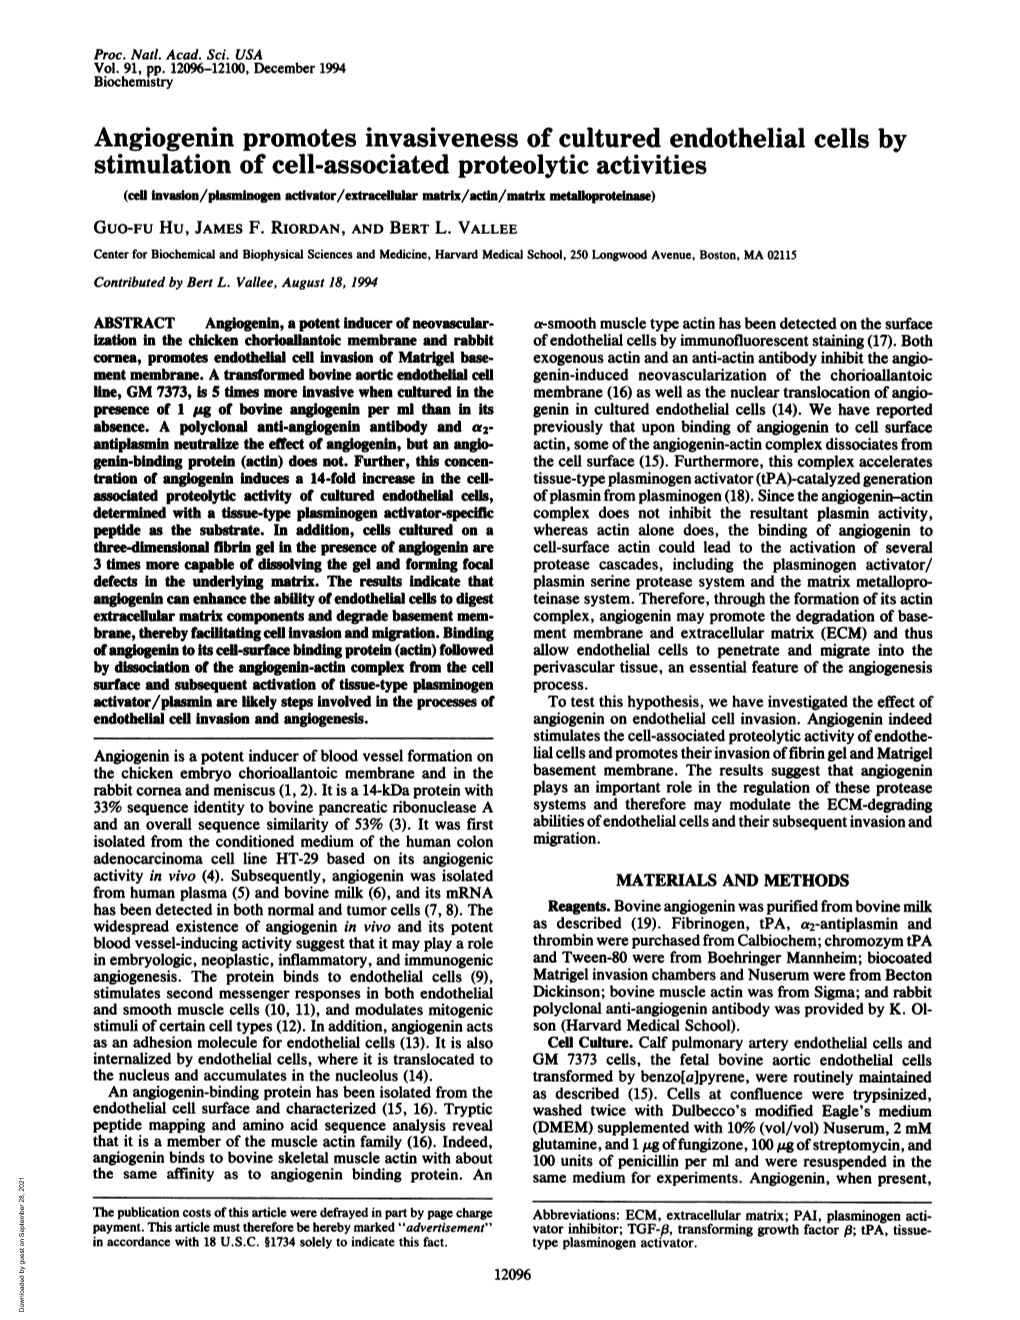 Stimulation of Cell-Associated Proteolytic Activities (Cell Lnvason/Plasmlnogen Activator/Extracelular Matrlx/Actin/Matrix Metafloproteinase) GUO-Fu Hu, JAMES F